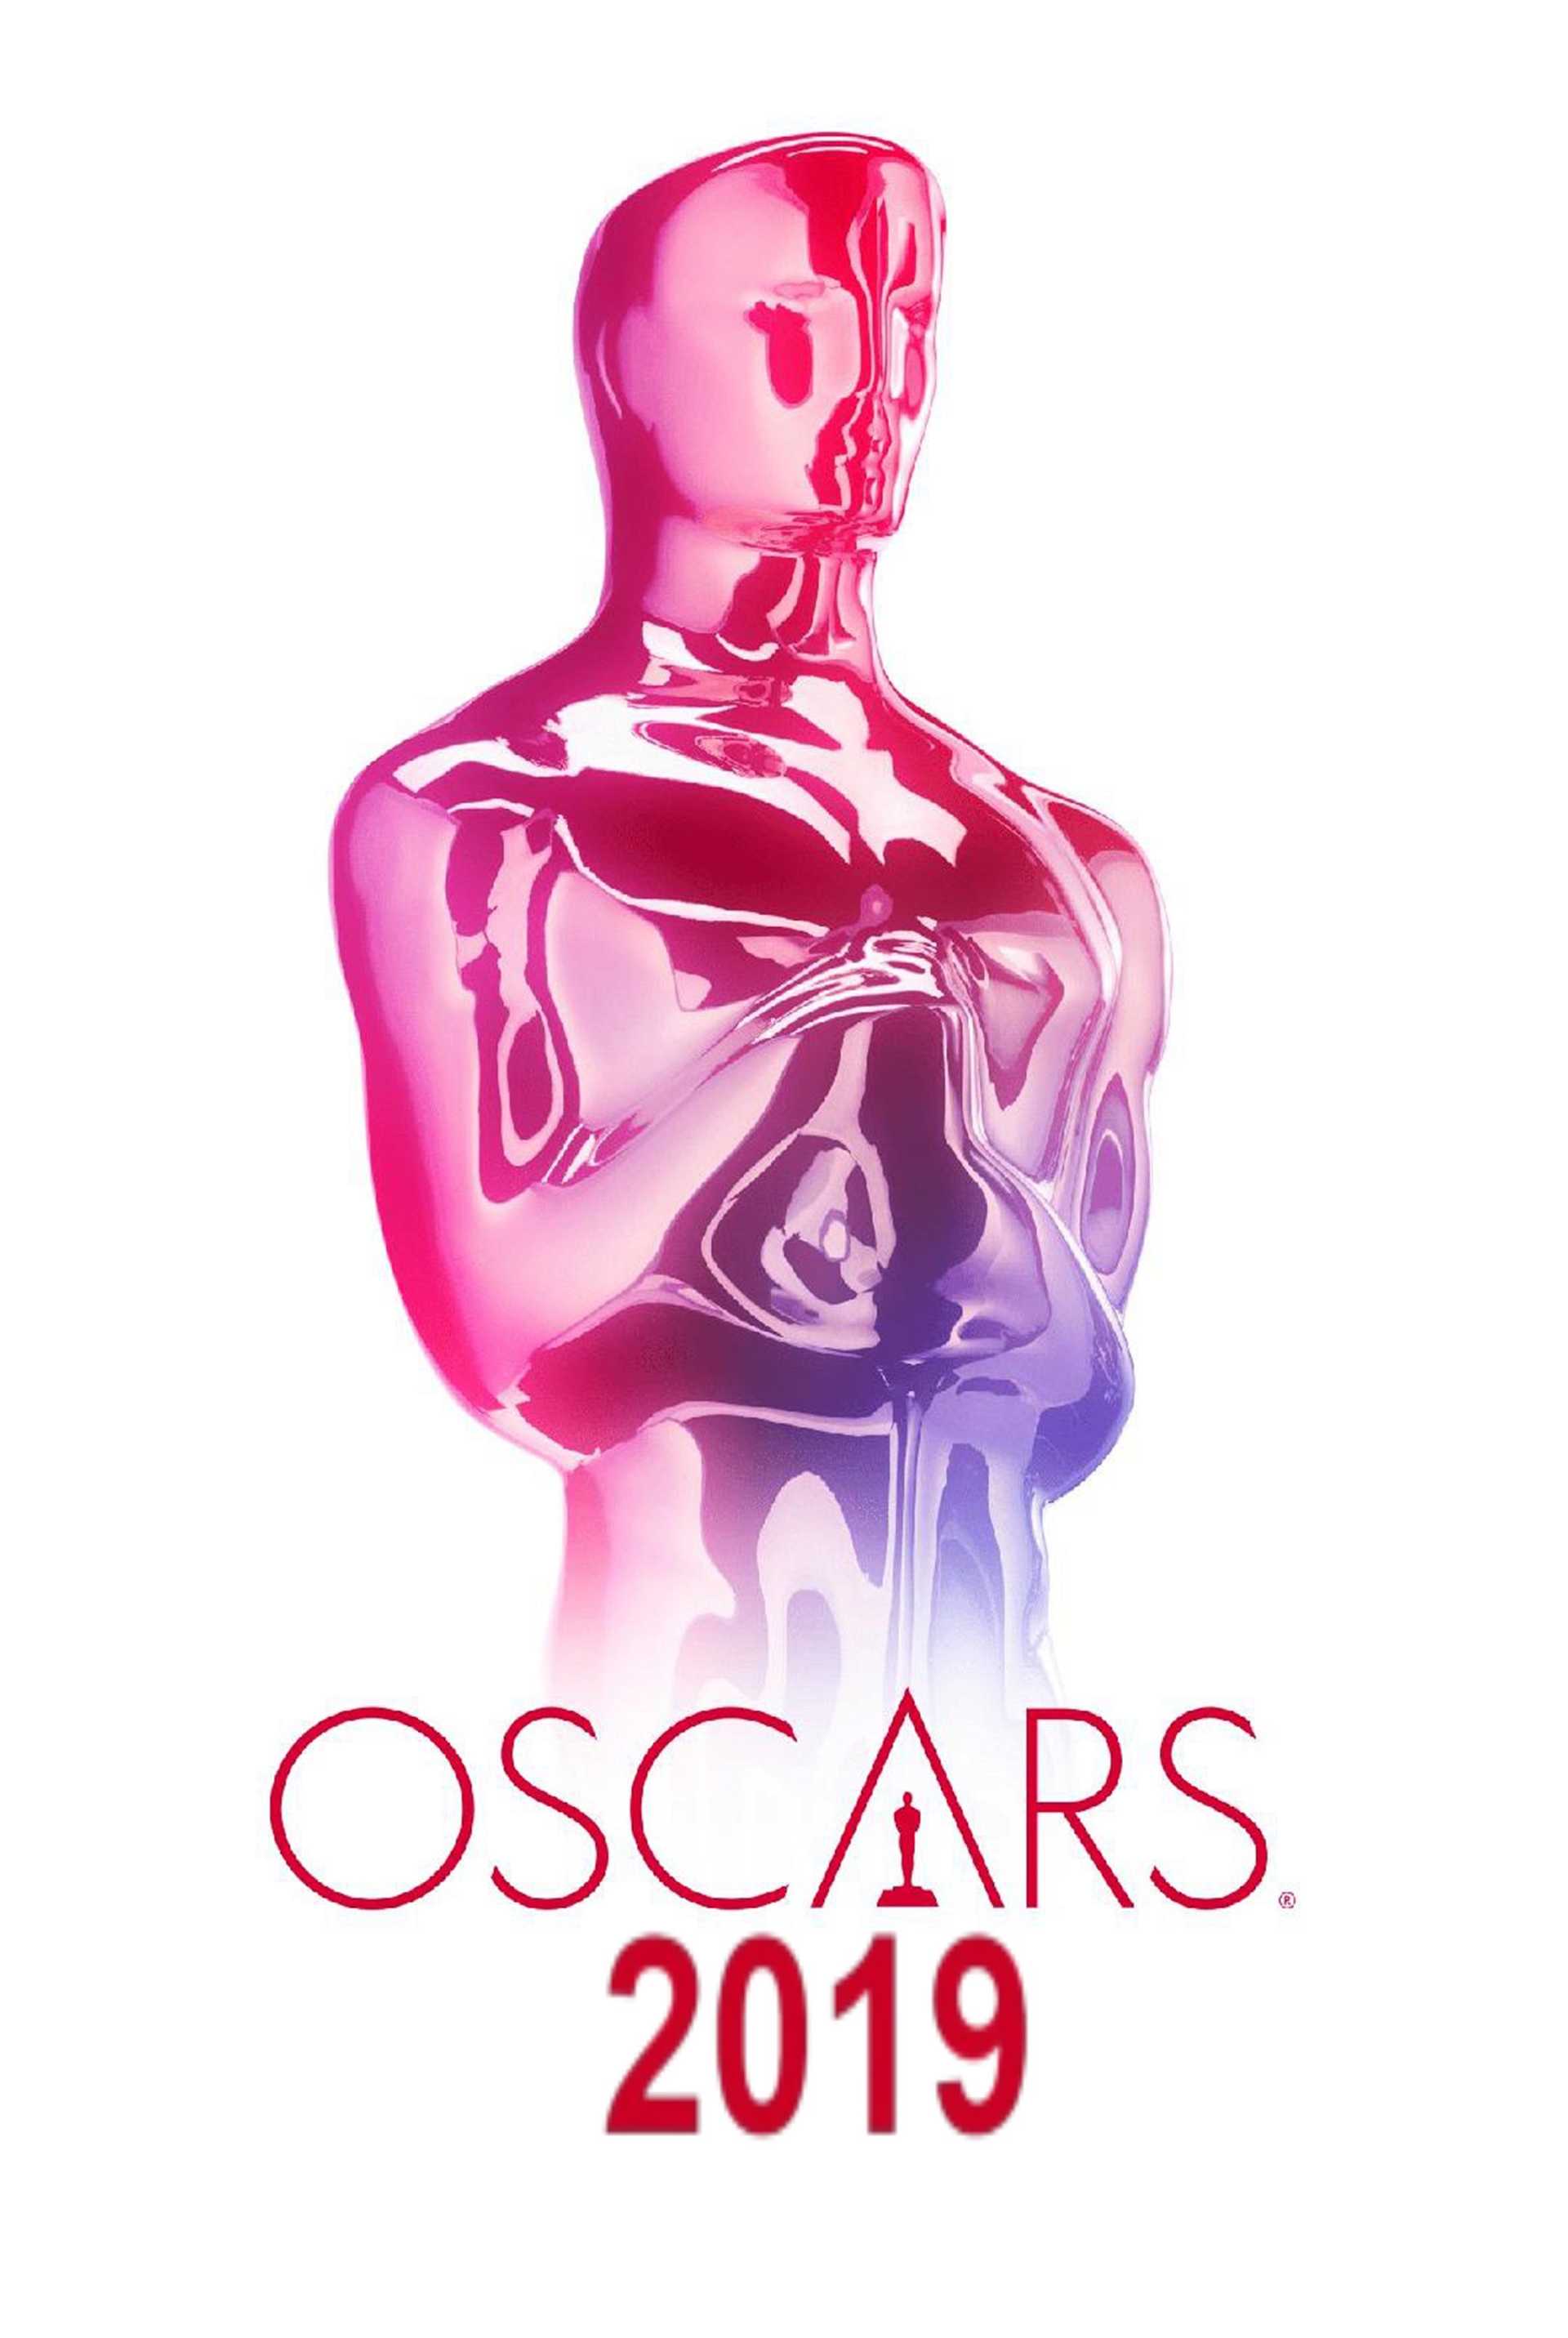 La notte degli Oscars - 91th Academy Awards (2019) in streaming